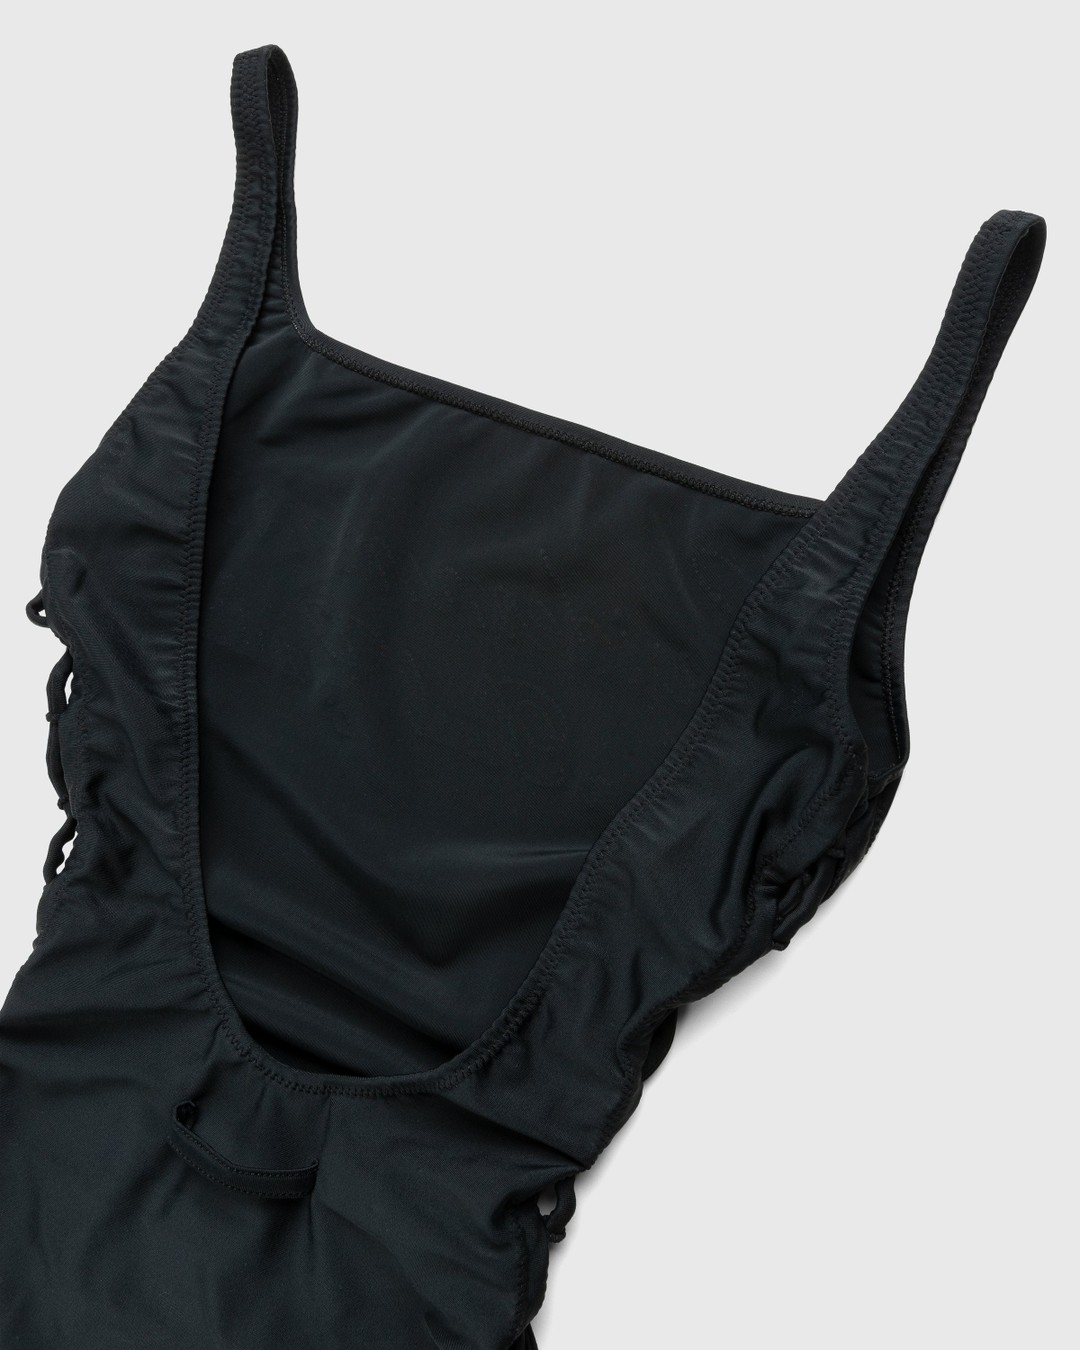 Jean Paul Gaultier – Évidemment Swimsuit Black - Swimwear - Black - Image 6